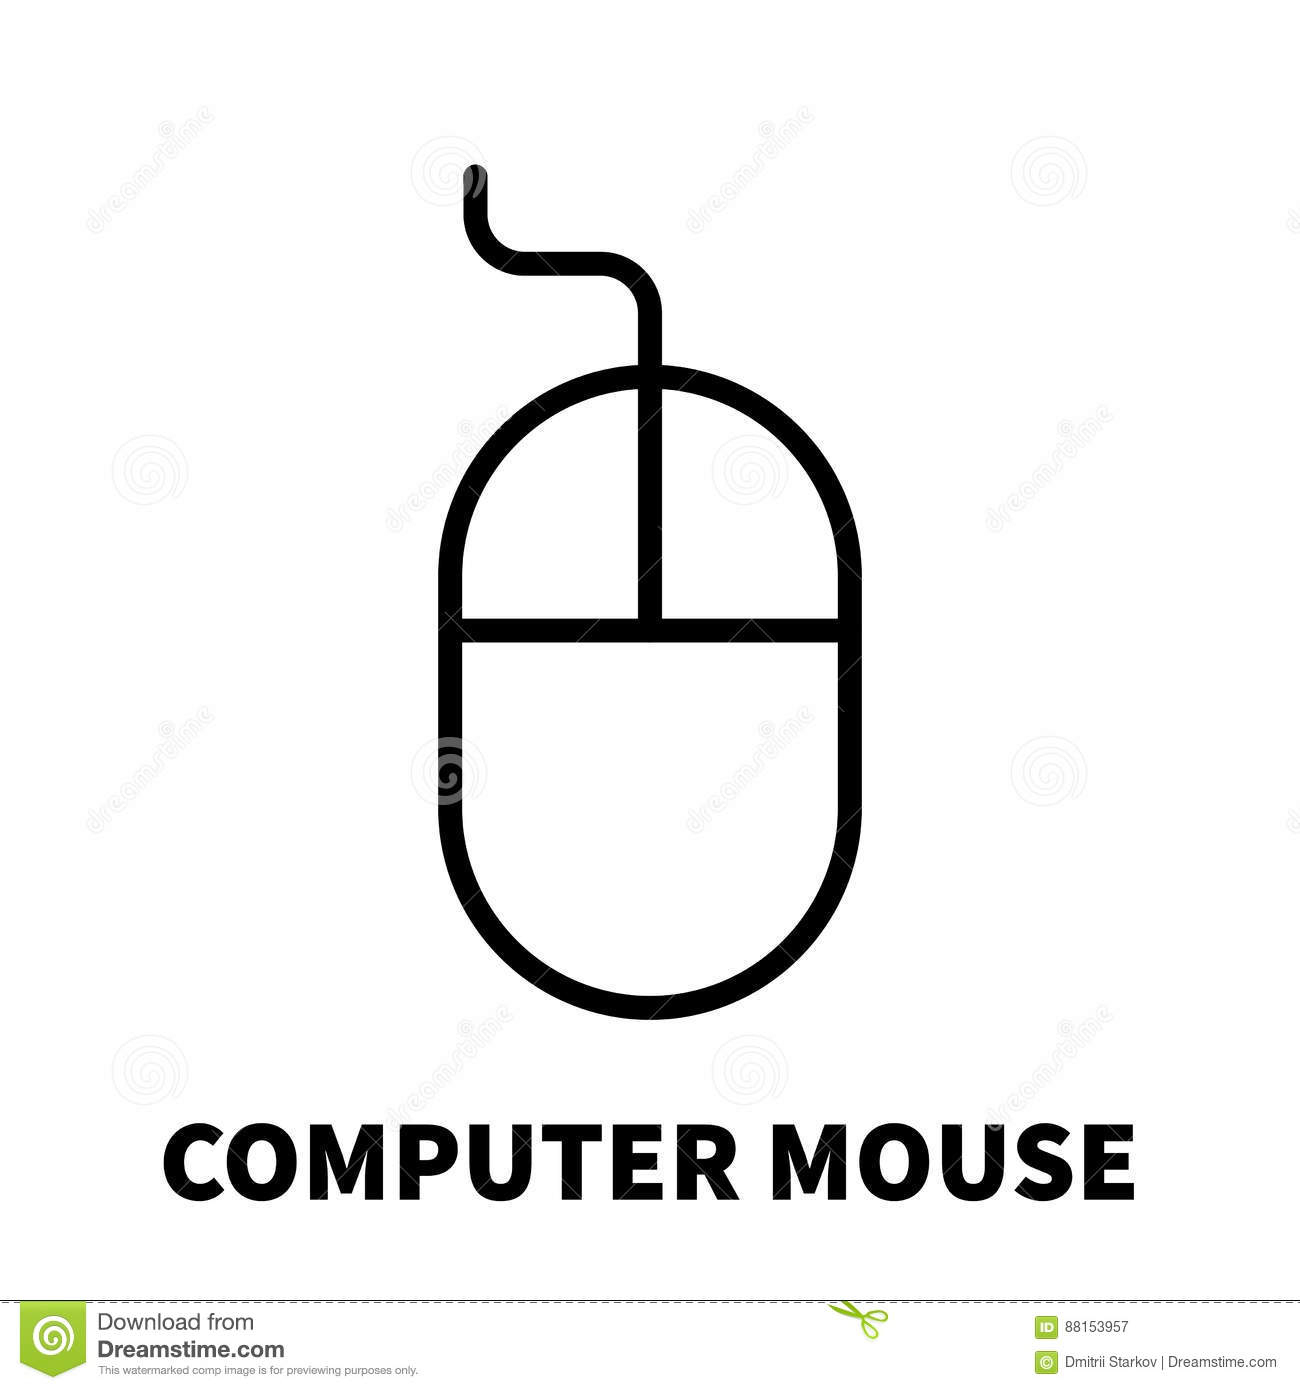 Computer Mouse Icon Or Logo In Modern Line Style. Stock dedans La Souris Du Web 